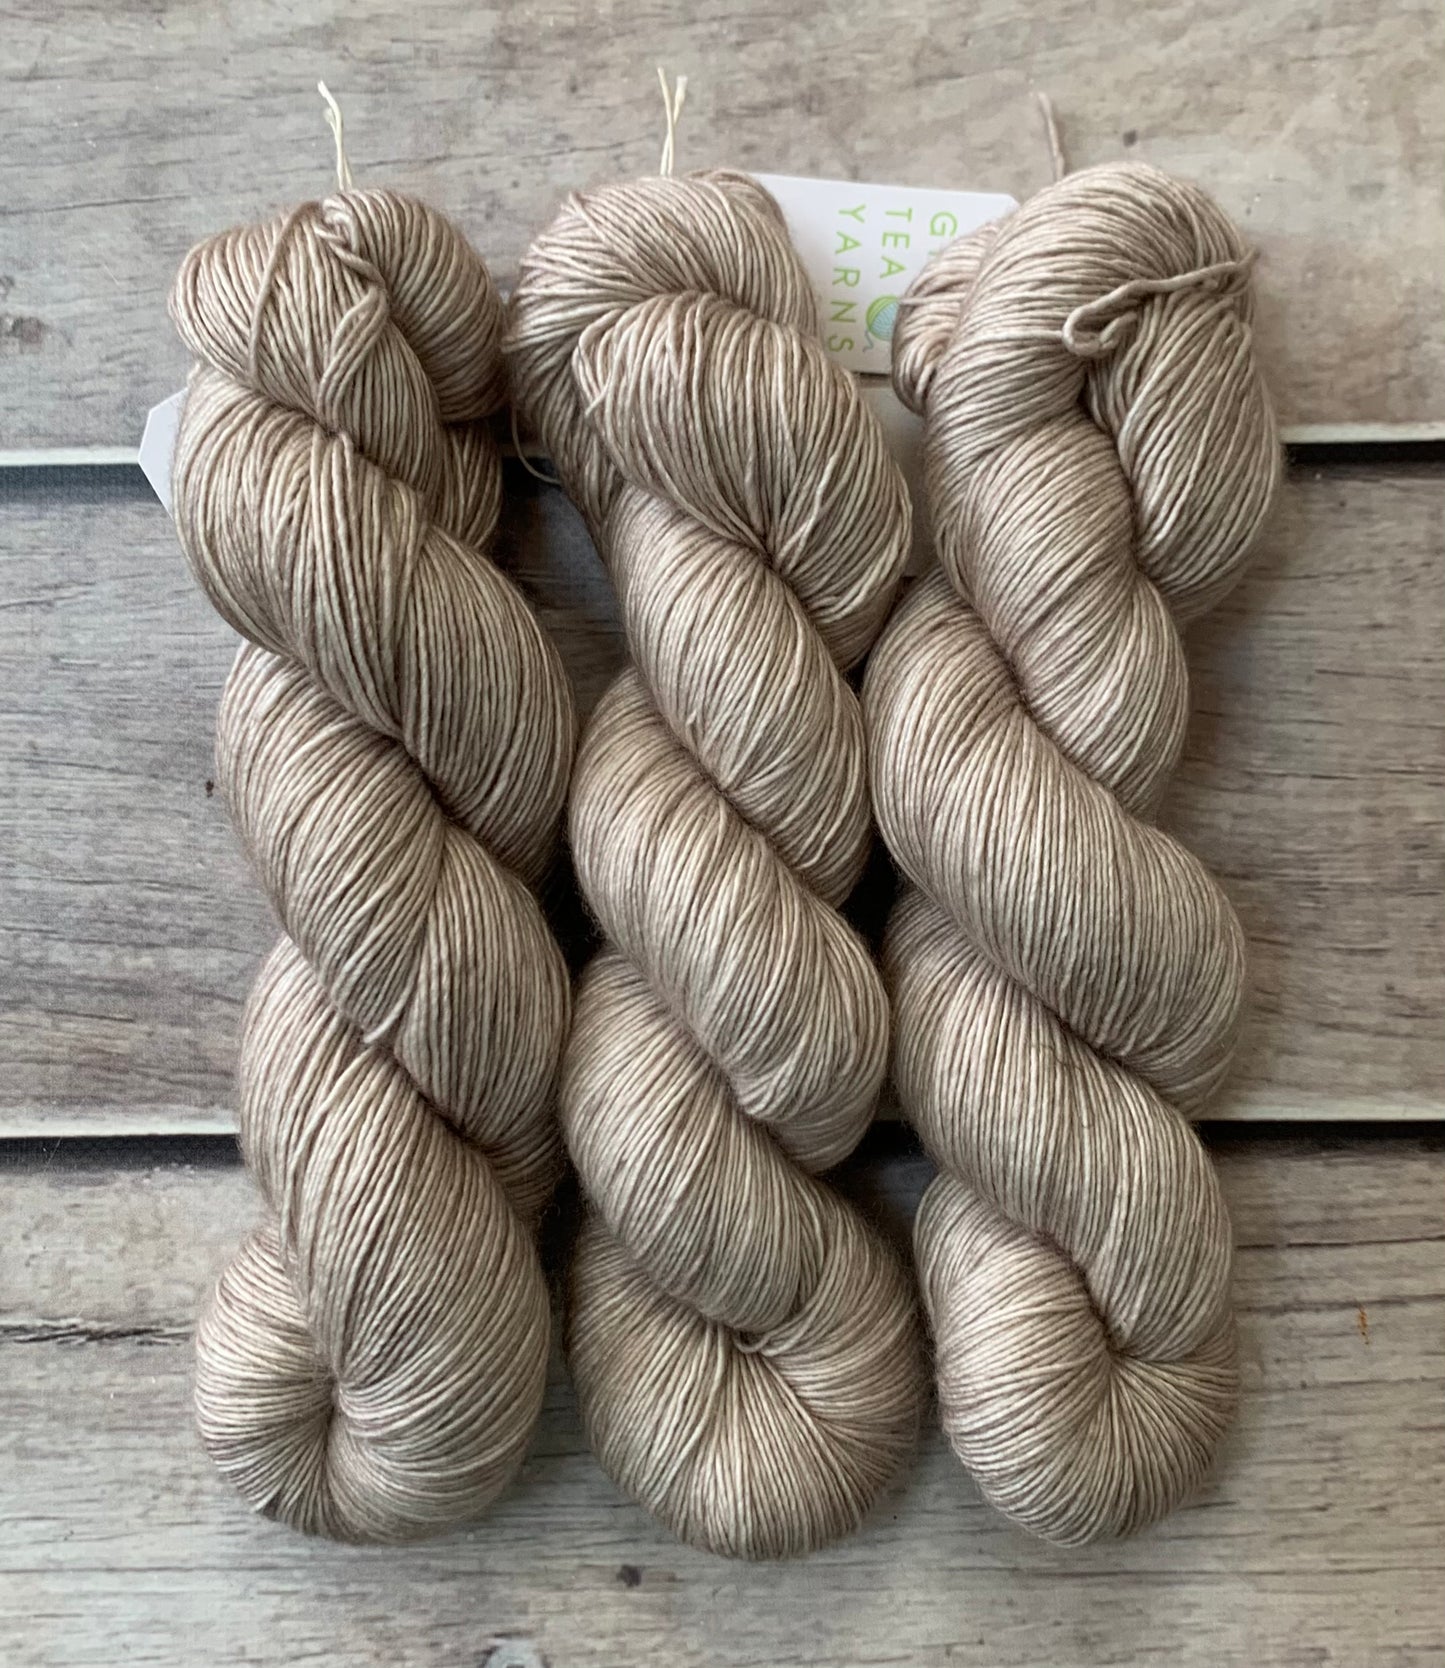 Wild Oats - 4 ply silk/merino singles yarn - Osmanthus